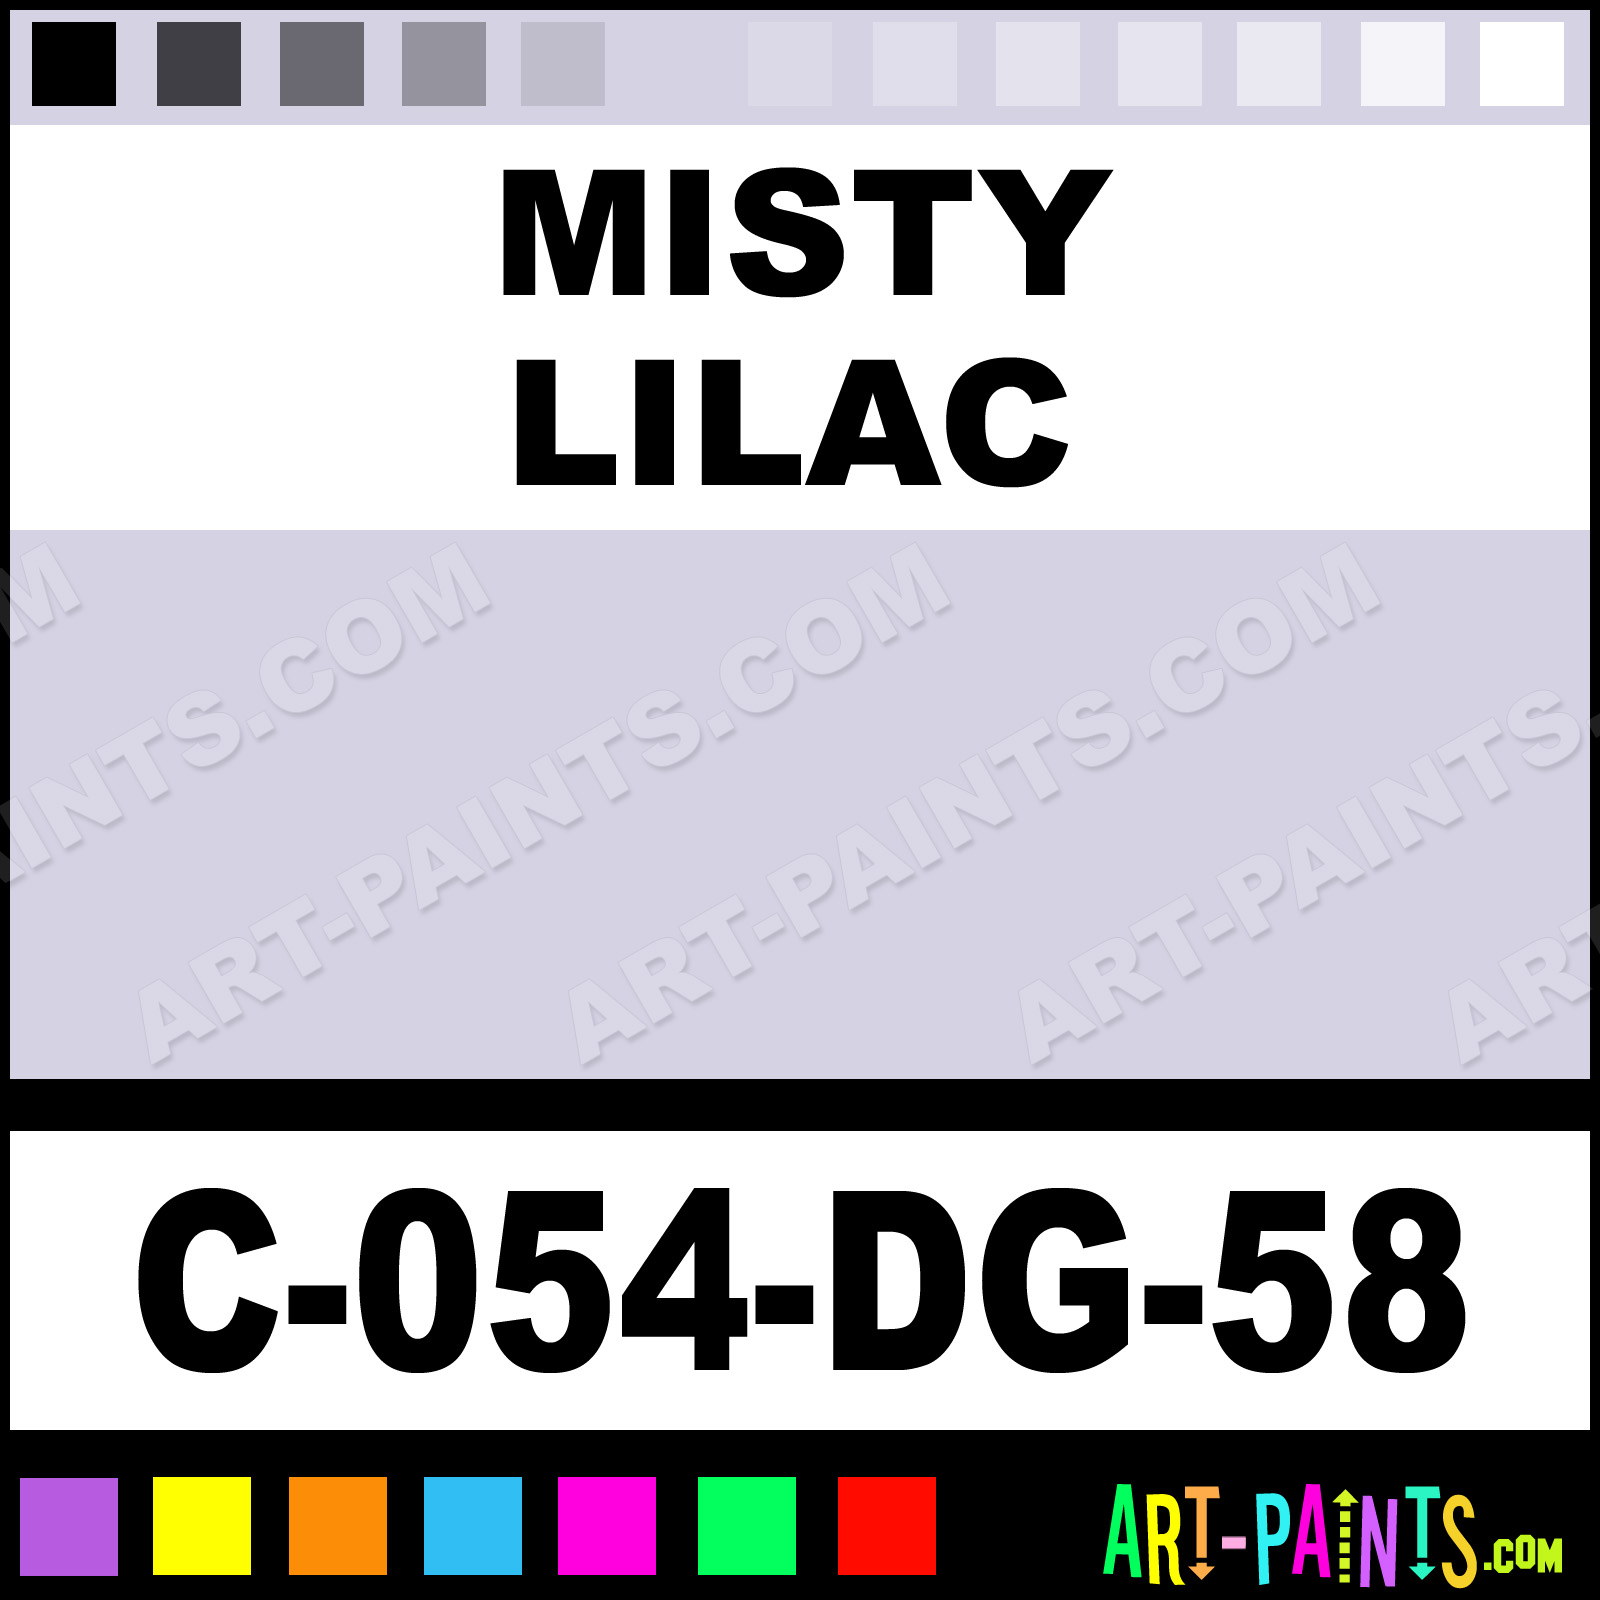 http://www.art-paints.com/Paints/Ceramic/Amaco/Deco-Gloss-Opaque/Misty-Lilac/Misty-Lilac-xlg.jpg